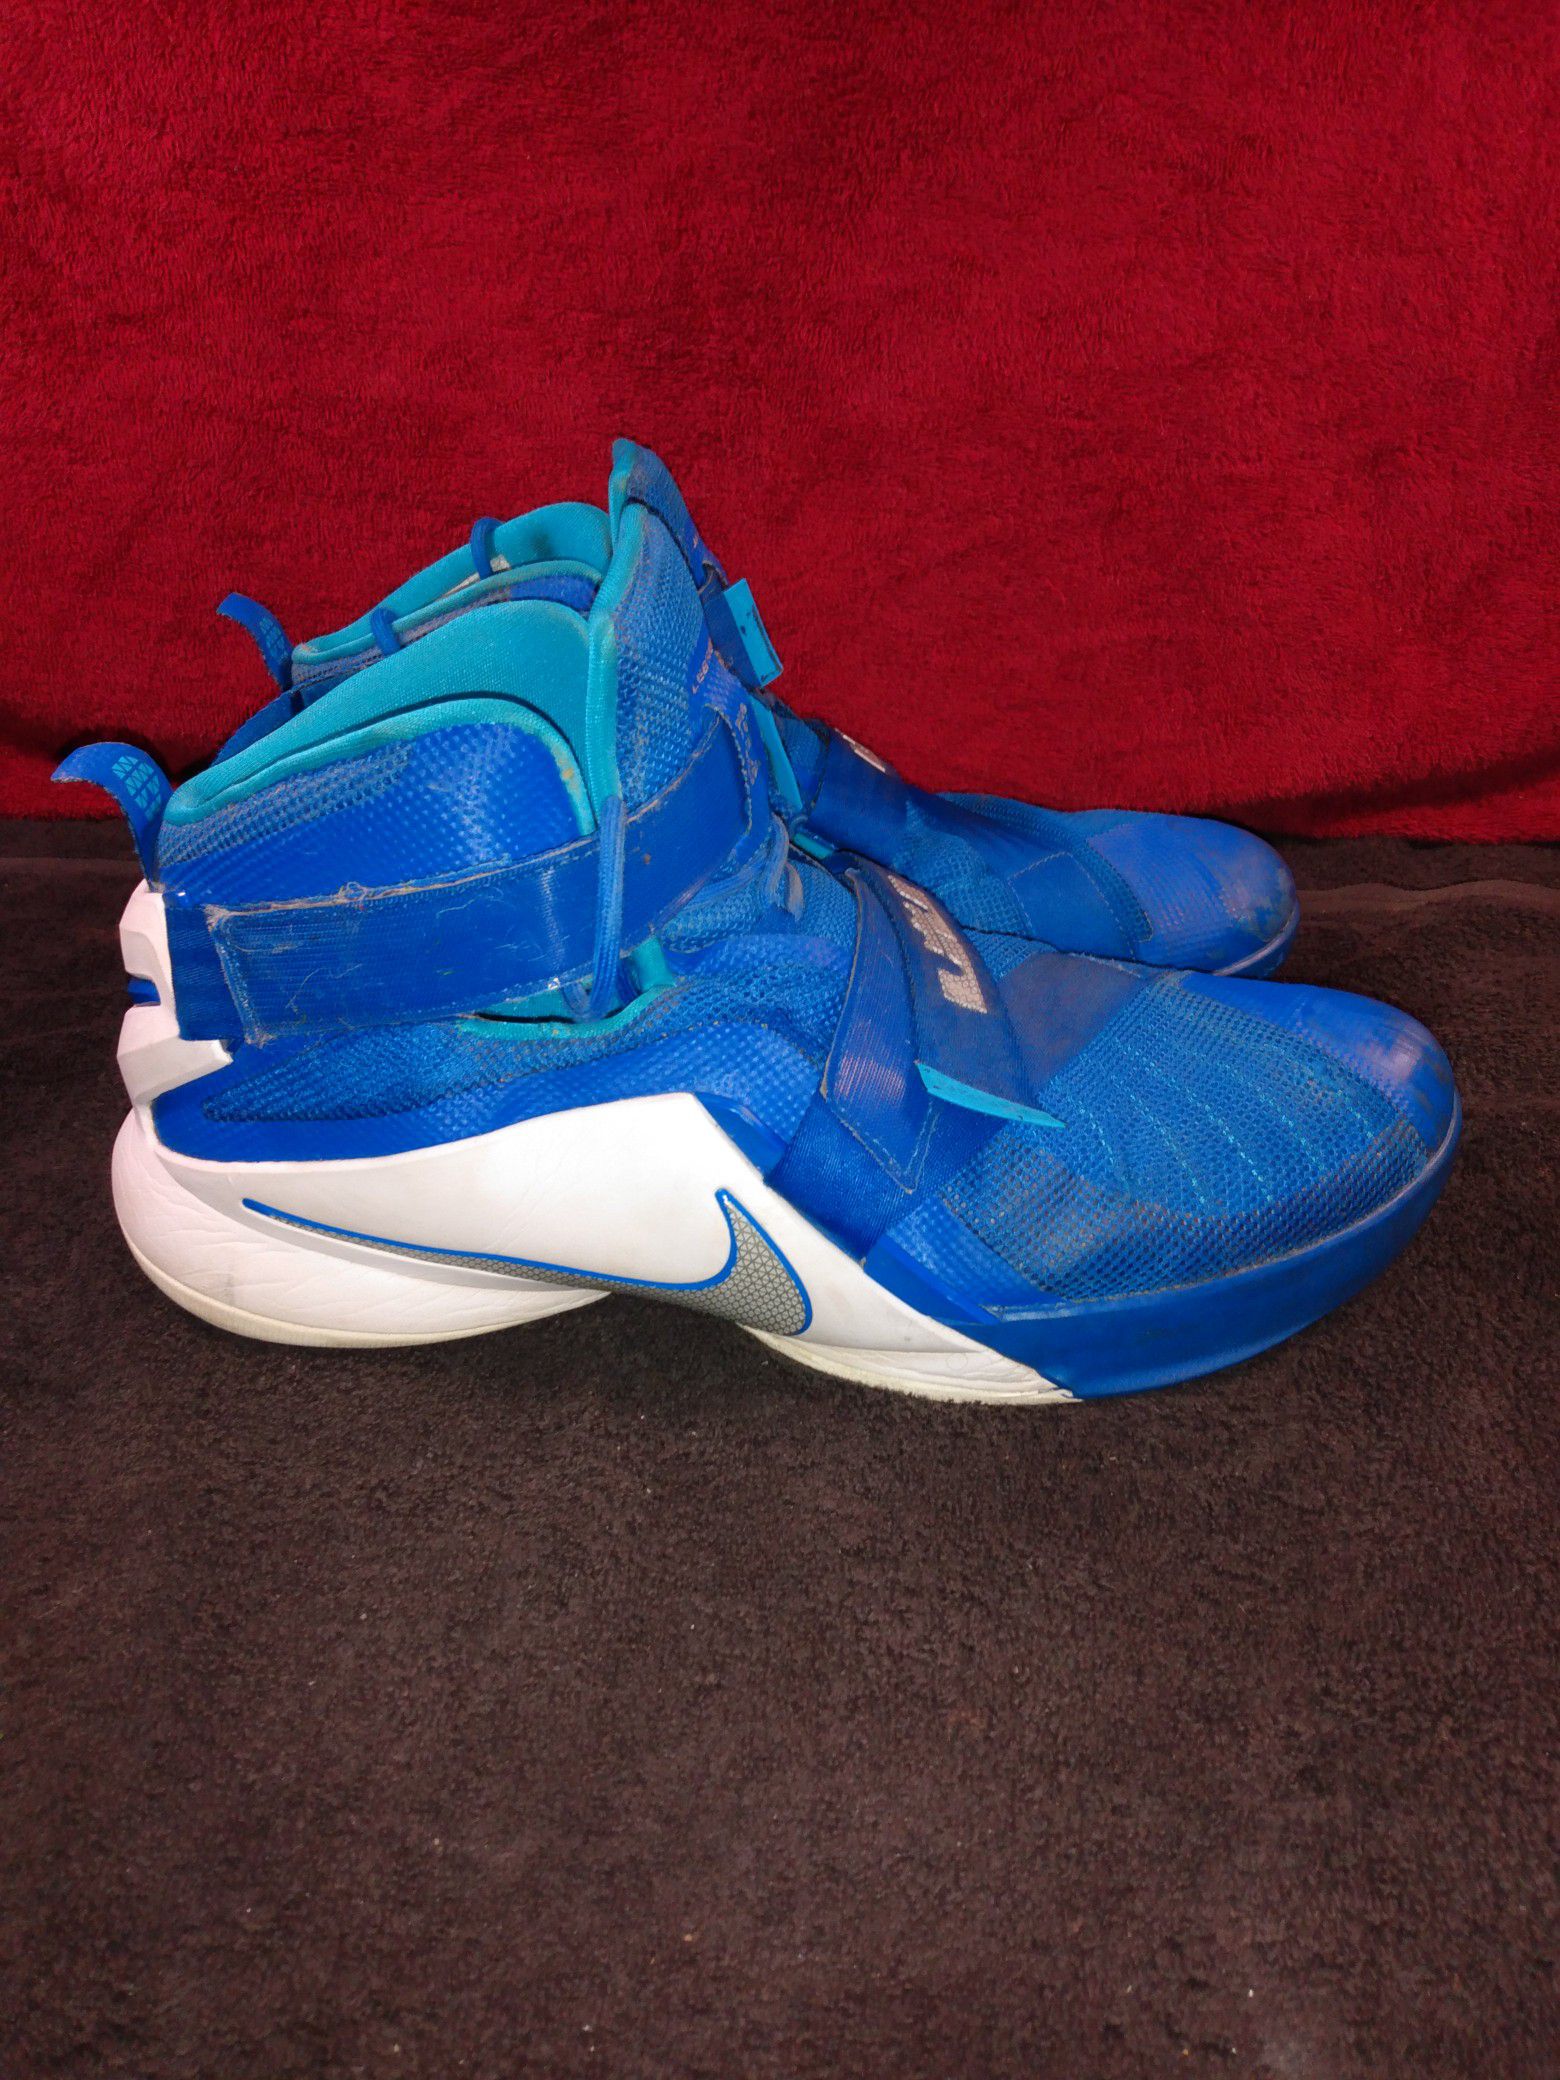 Nike Lebron Soldier IX TB Blue White Basketball Shoes 749498-401 Mens Size 17